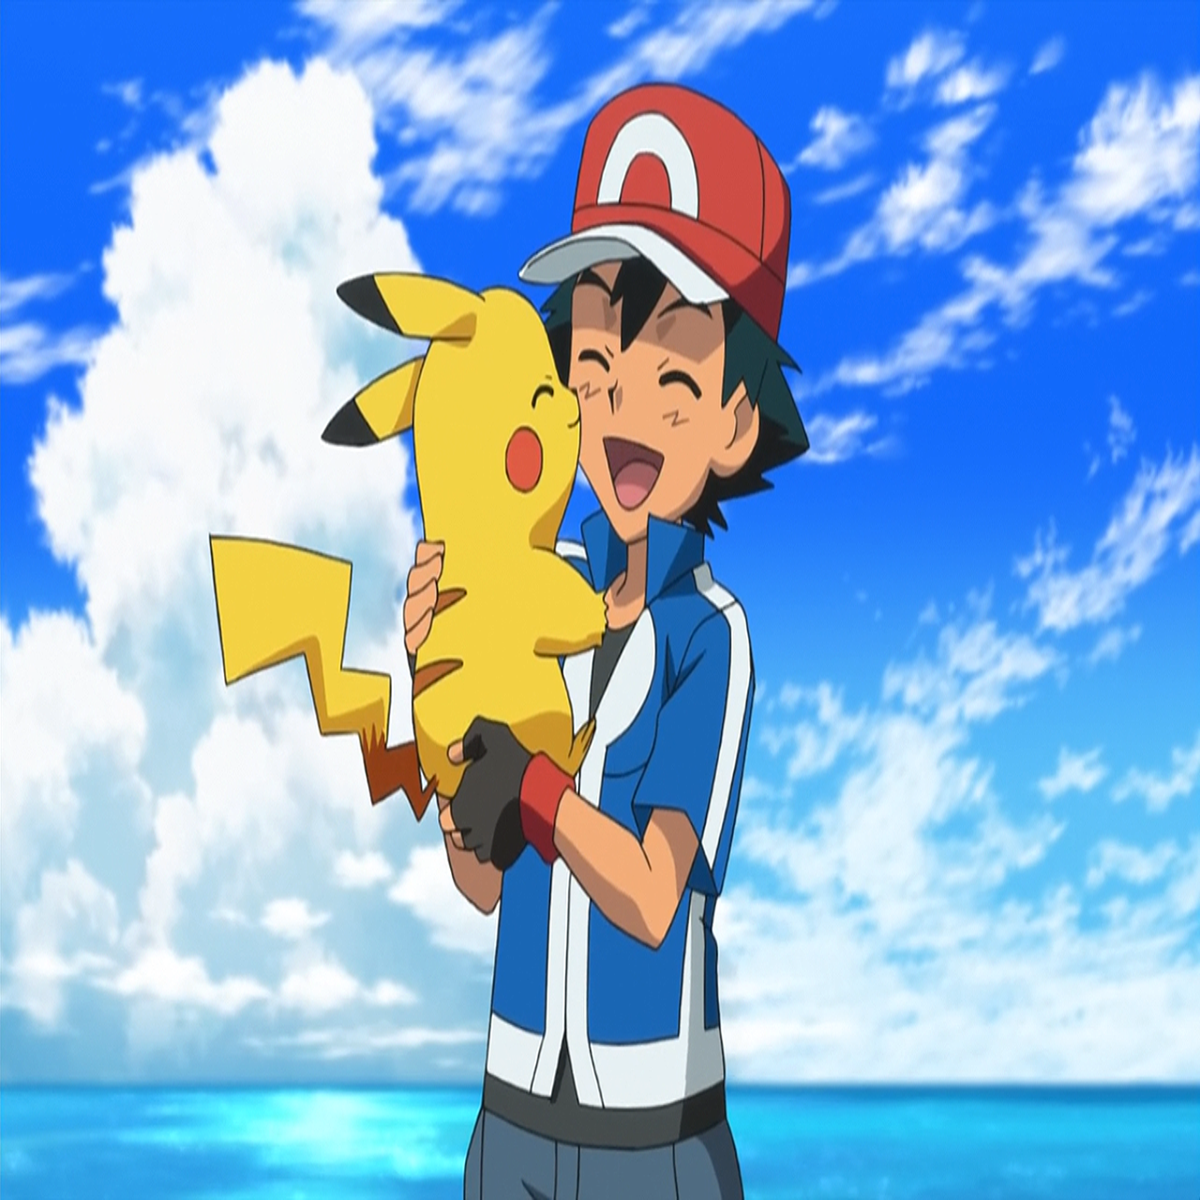 This is how much I love my Buddy Pokemon : r/pokemongo